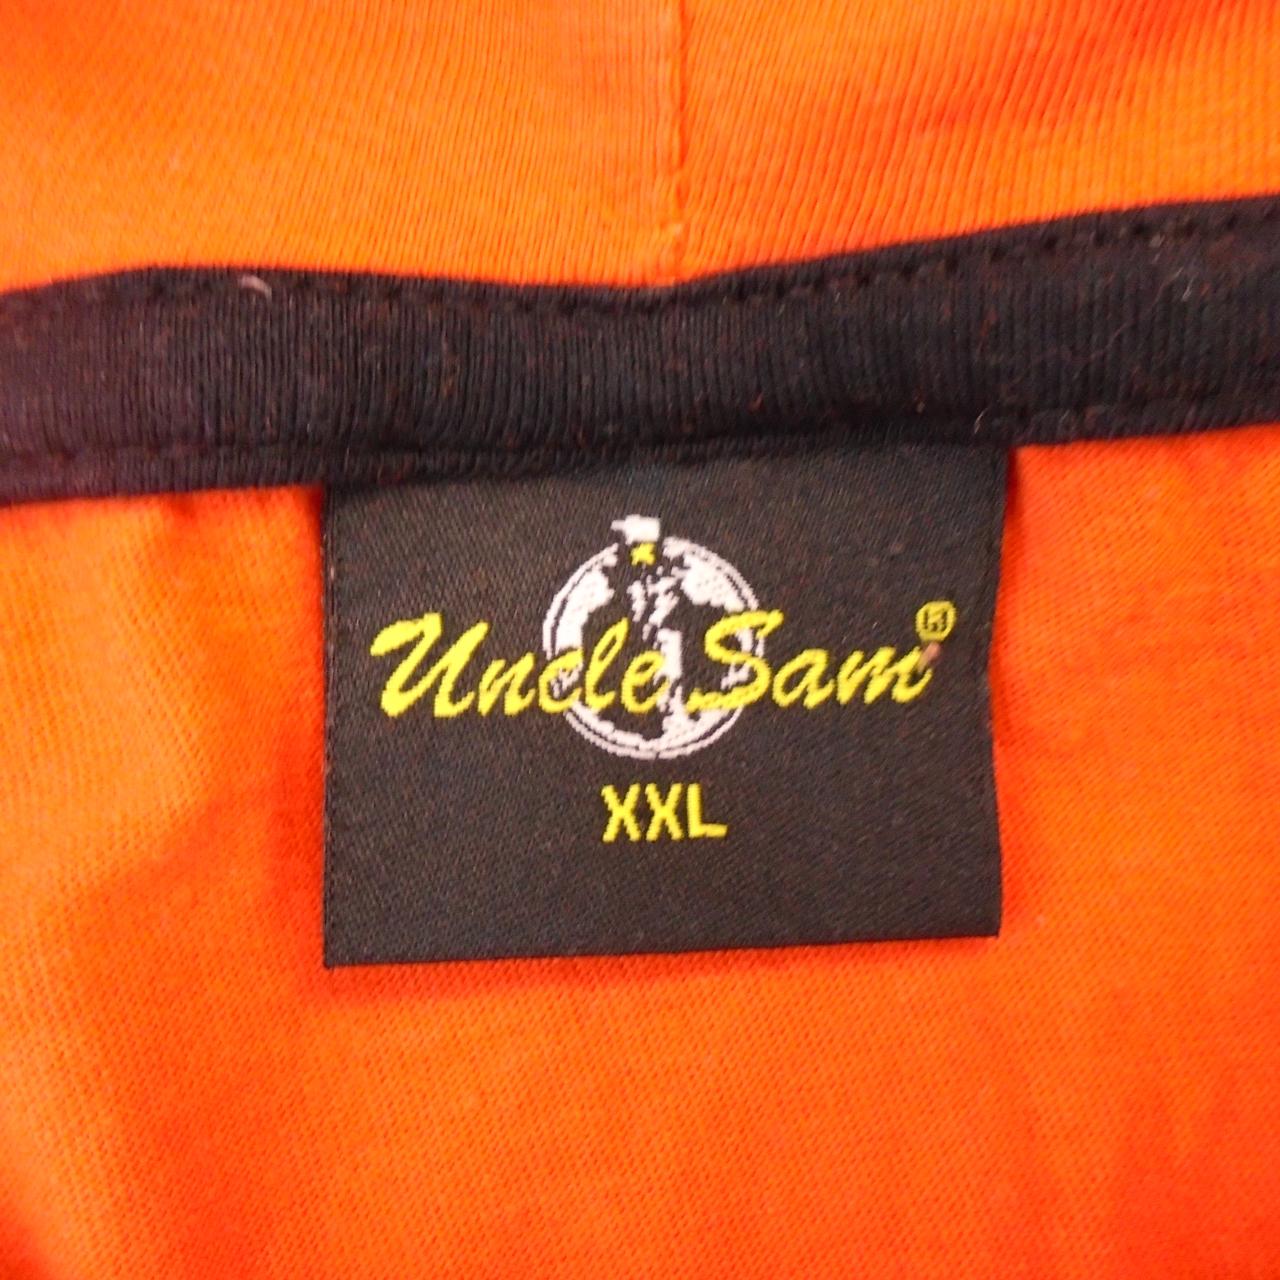 Camiseta de hombre Tío Sam.  Naranja.  XXL.  Usó.  Bien